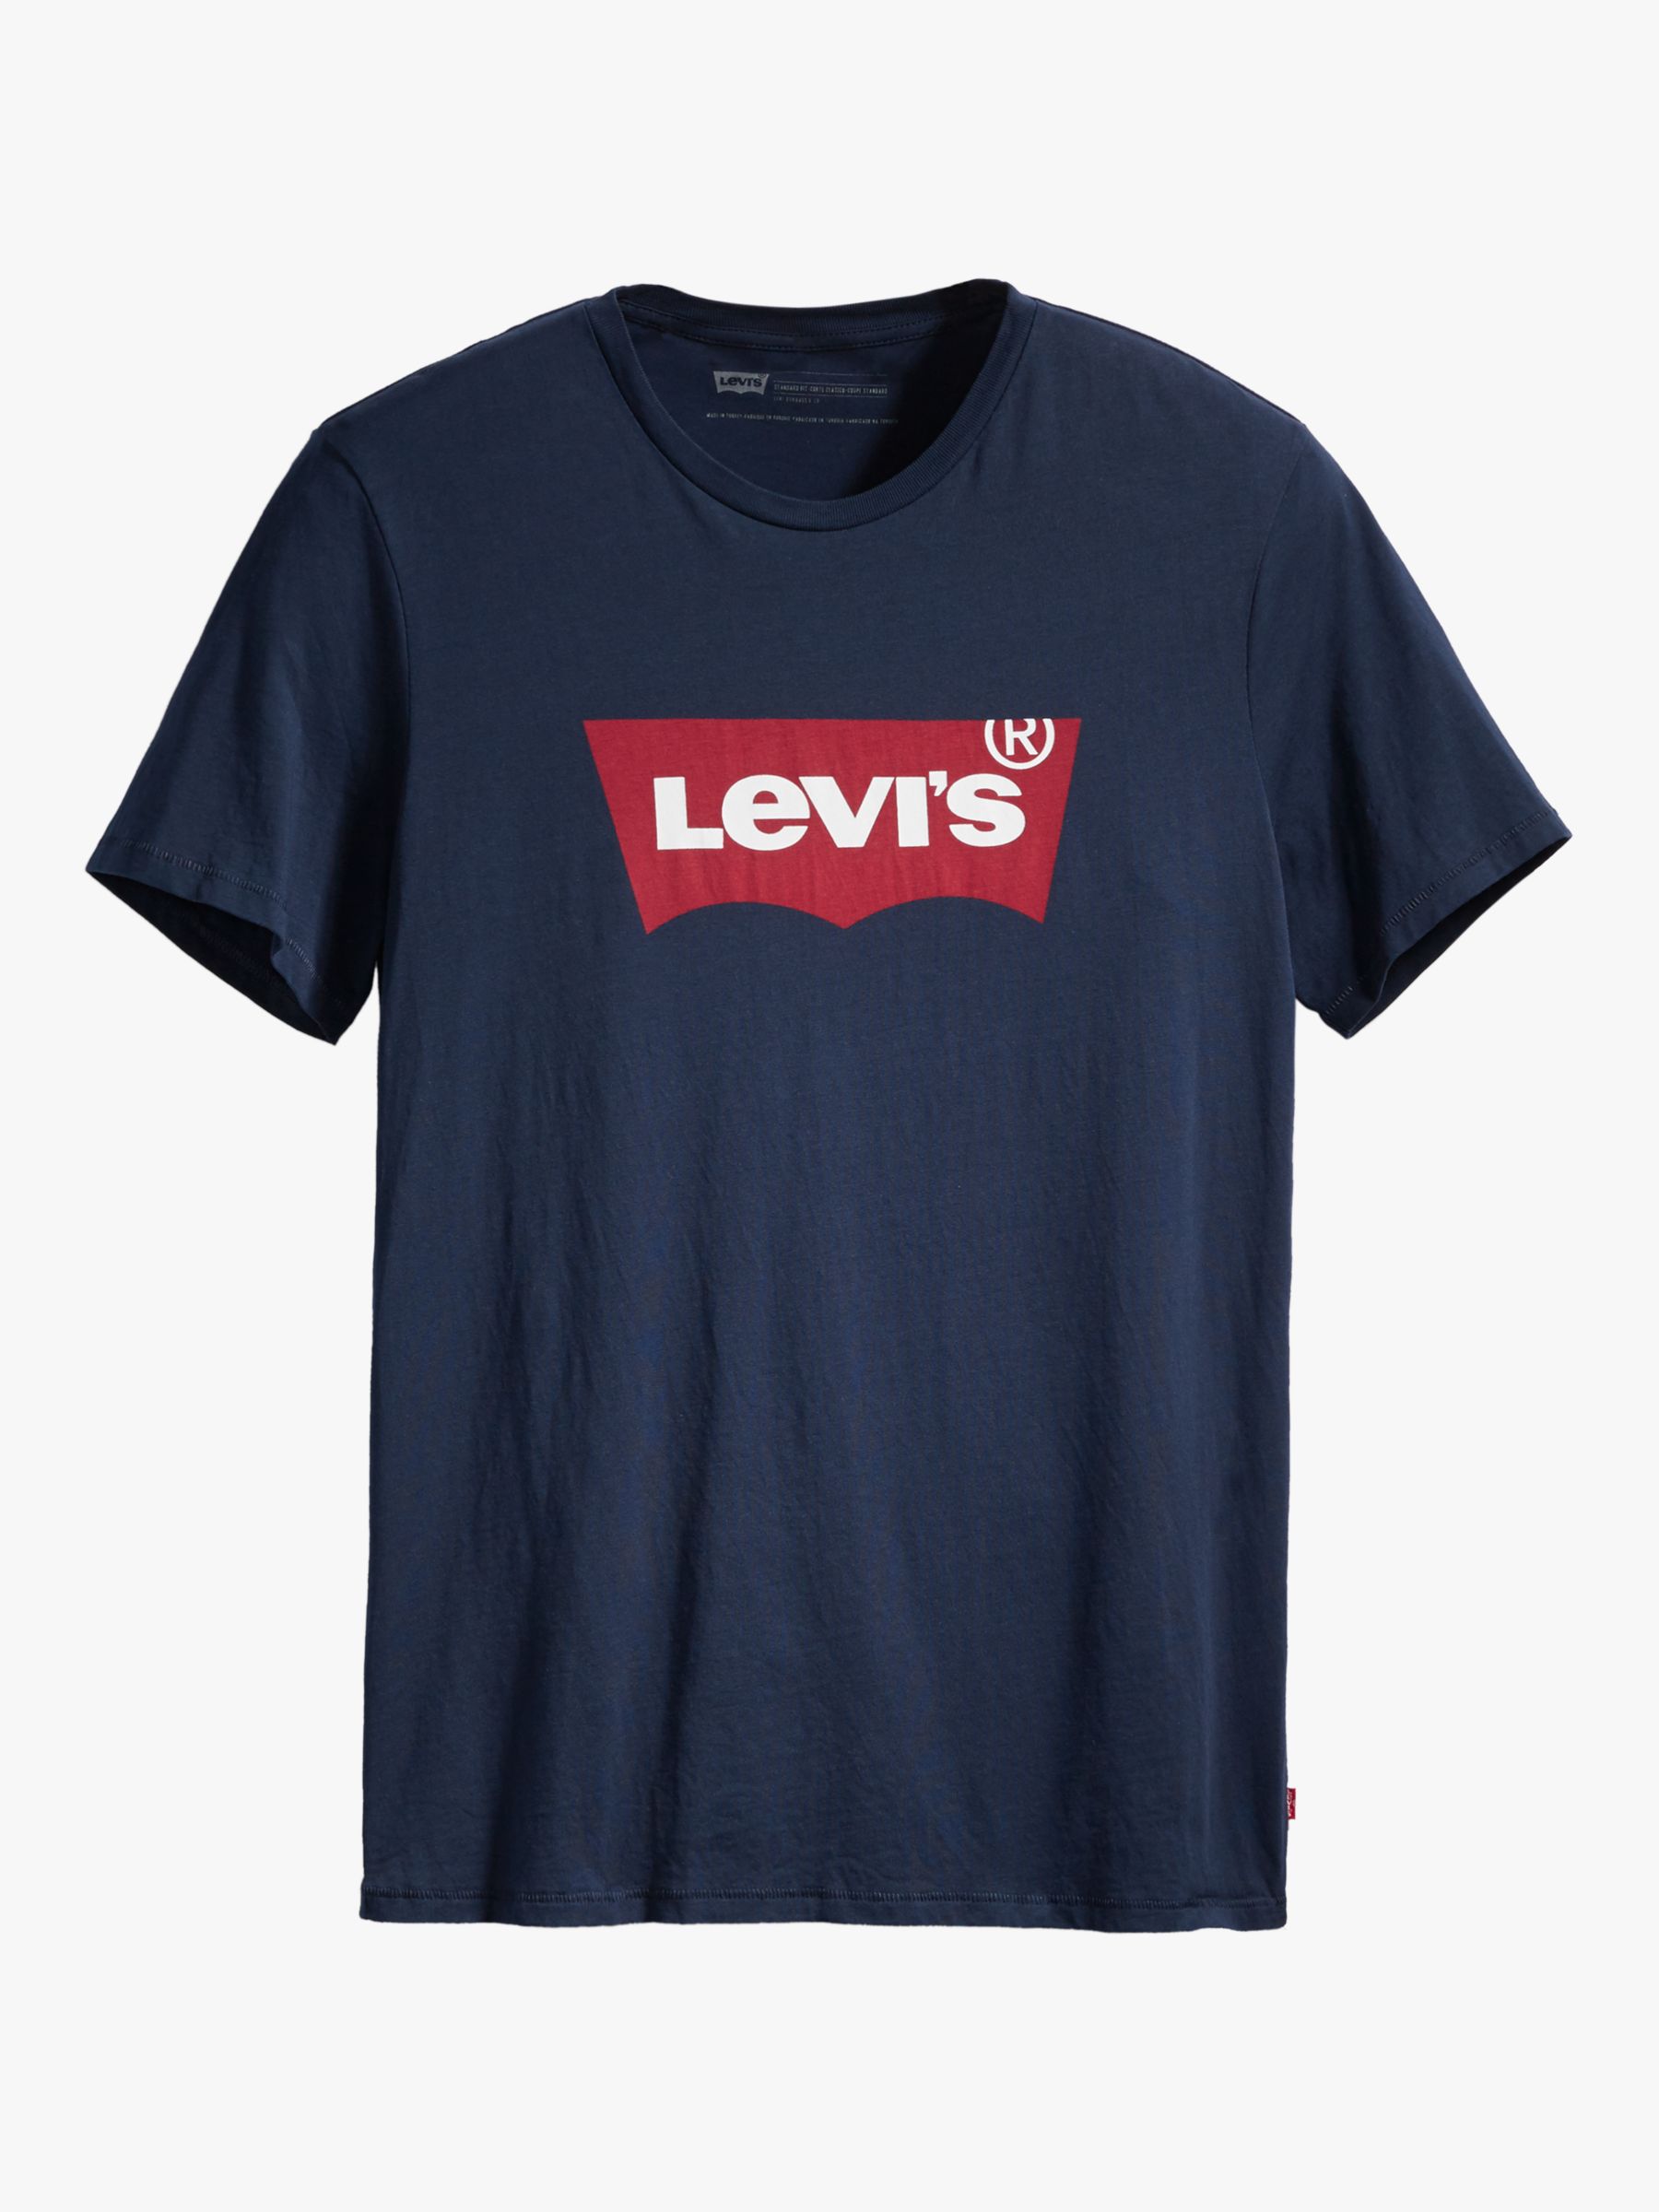 Levi's Batwing Graphic Logo T-Shirt, Dress Blues, S